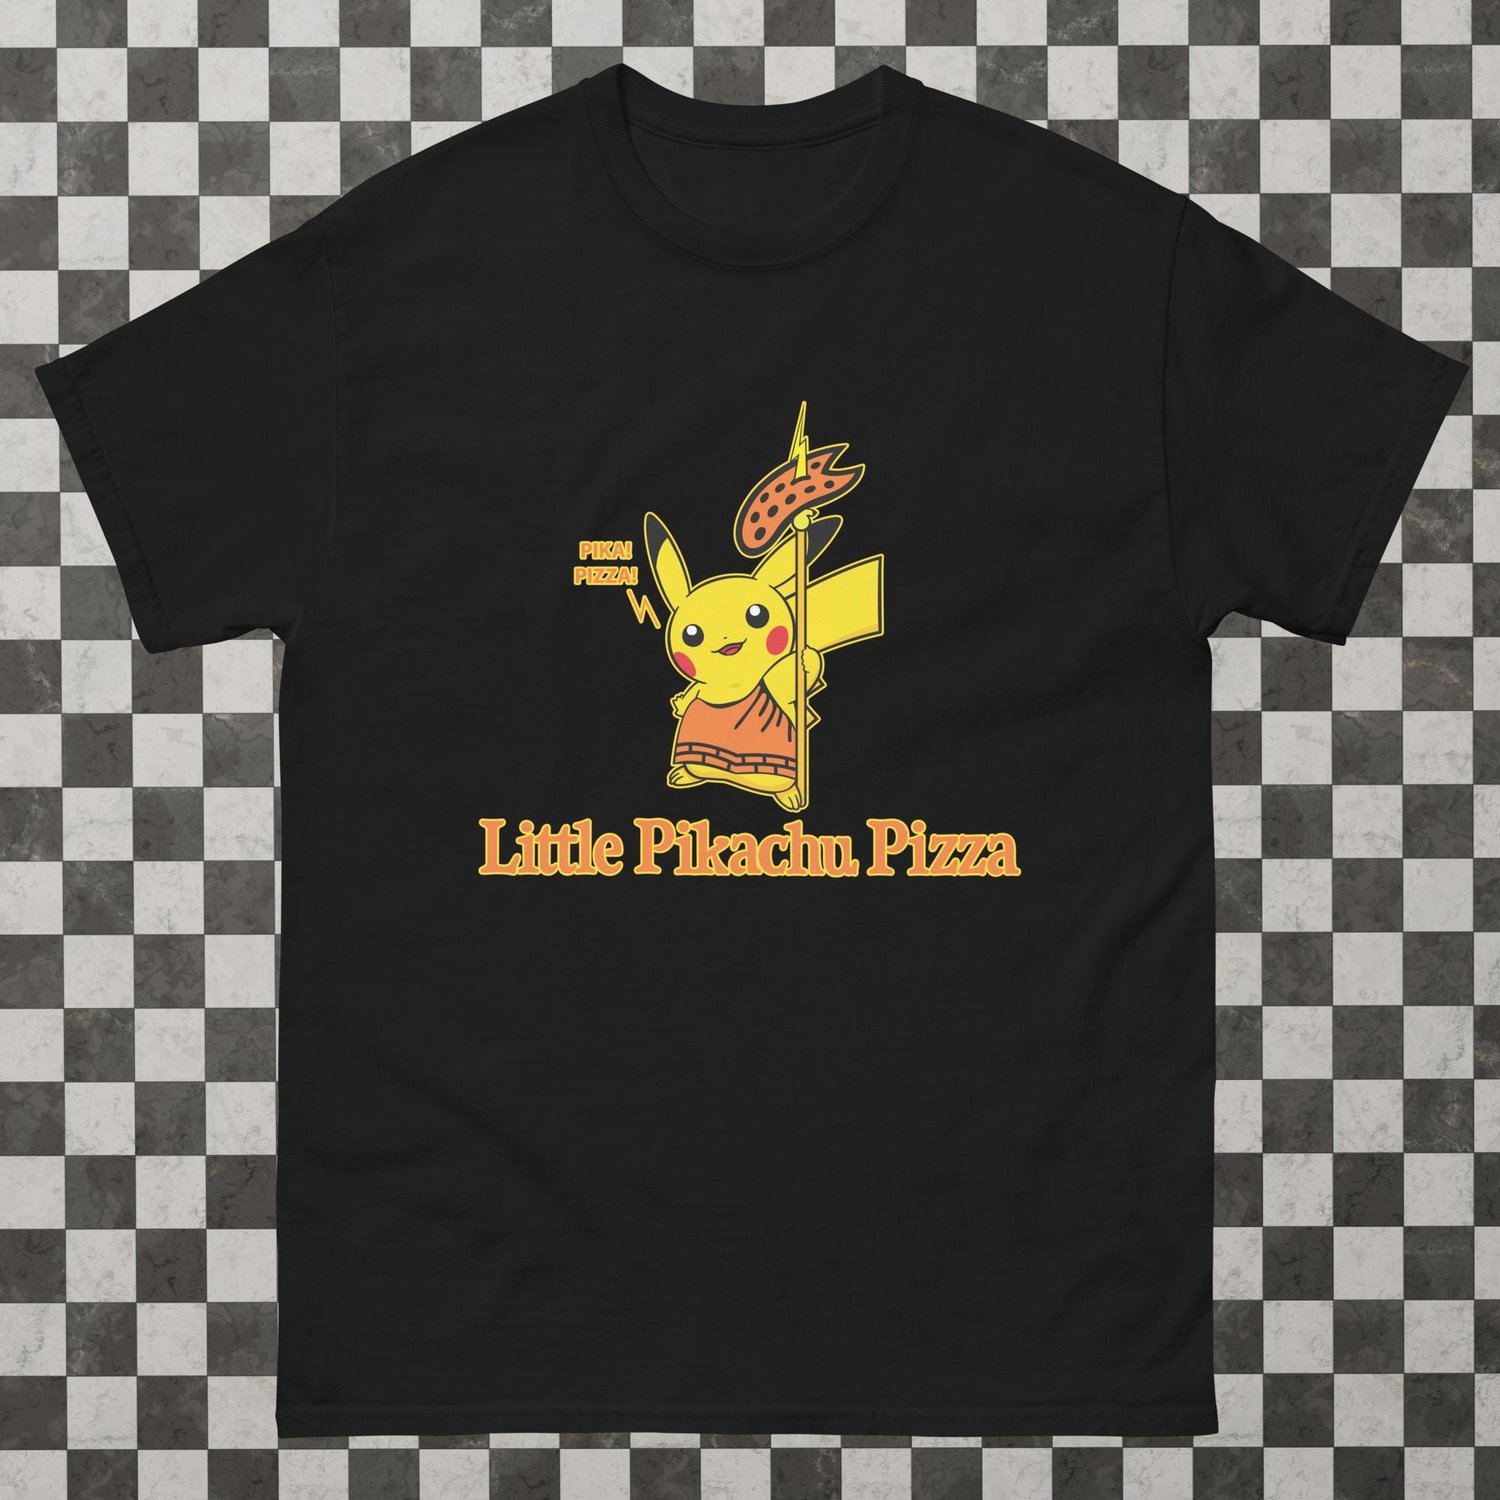 Little Pikachu Pizza - Banned Design